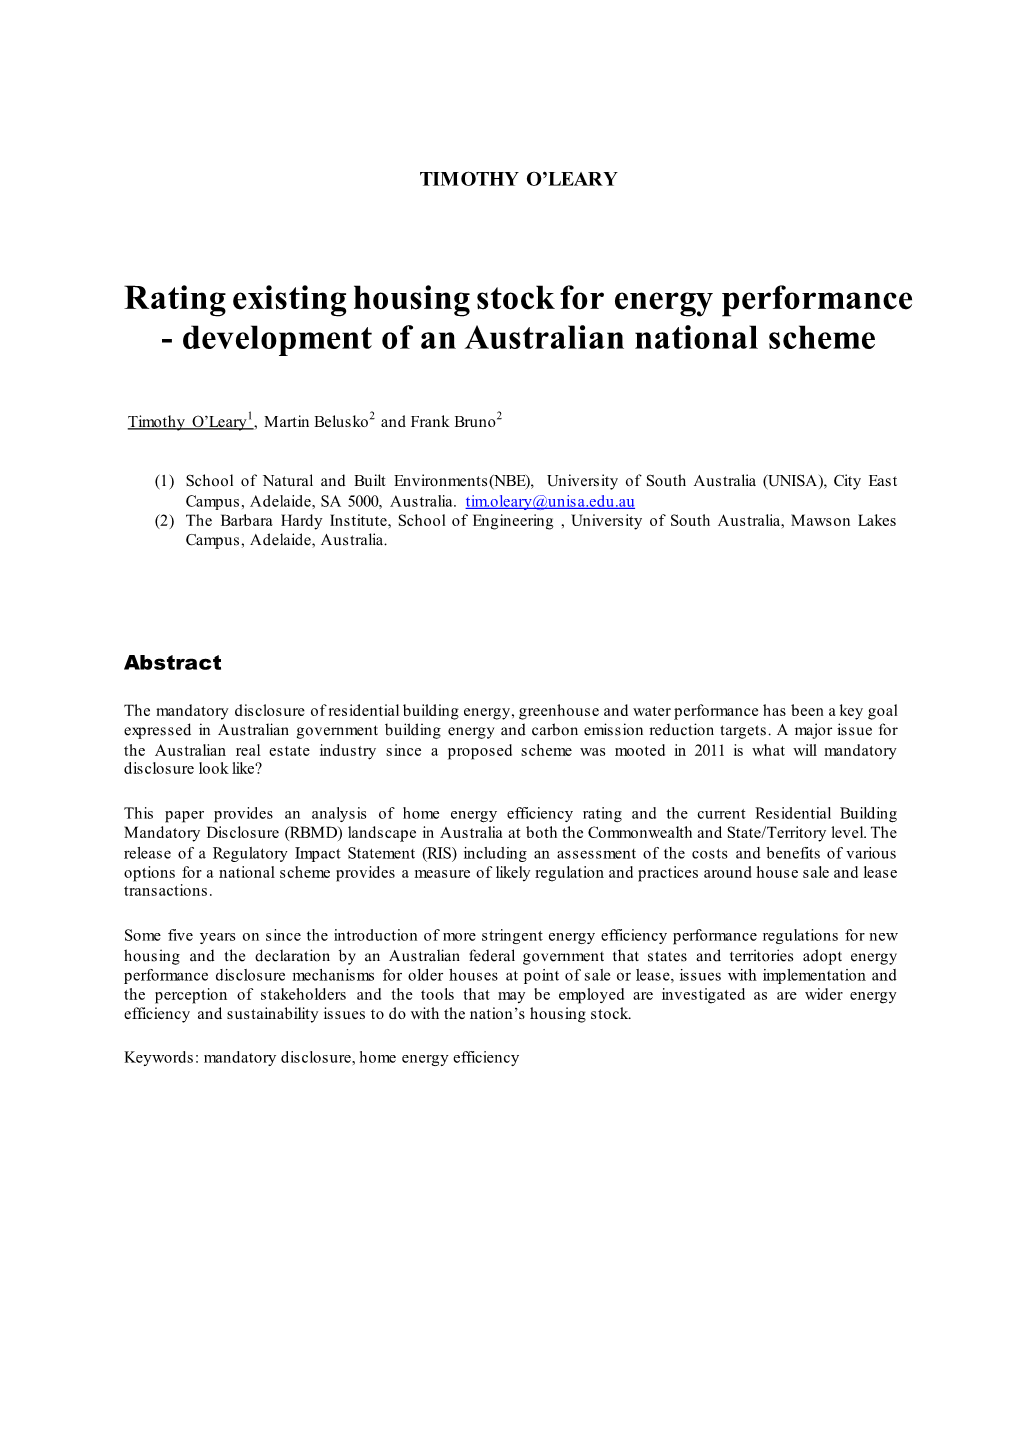 Rating Existing Housing Stock for Energy Performance - Development of an Australian National Scheme